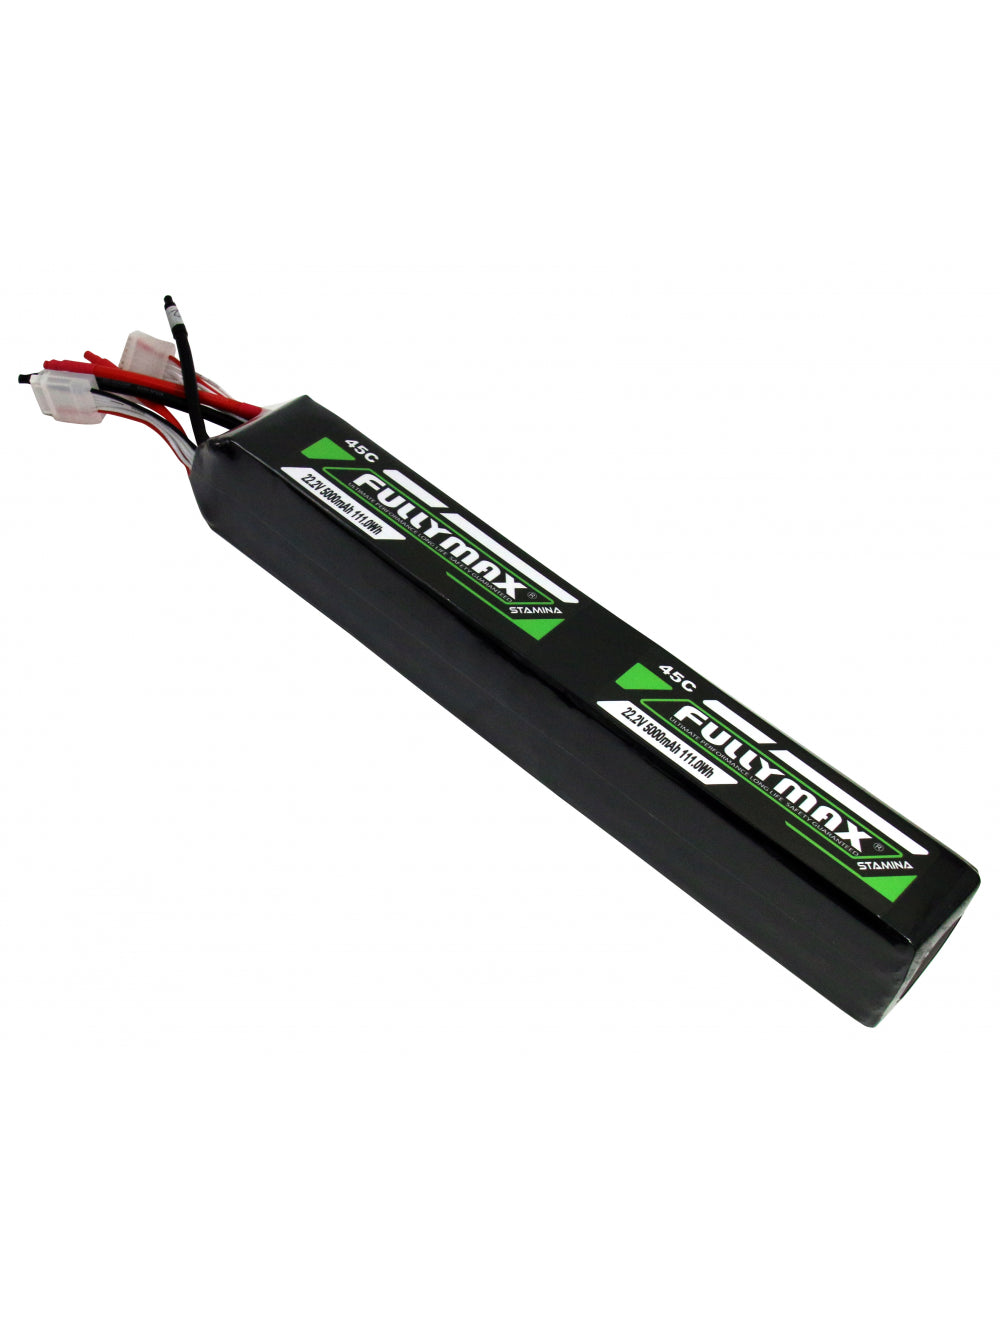 Overlander Fullymax 5000mAh 22.2V (x2) 12S 45C LiPo Battery - XT90 Connector 3449